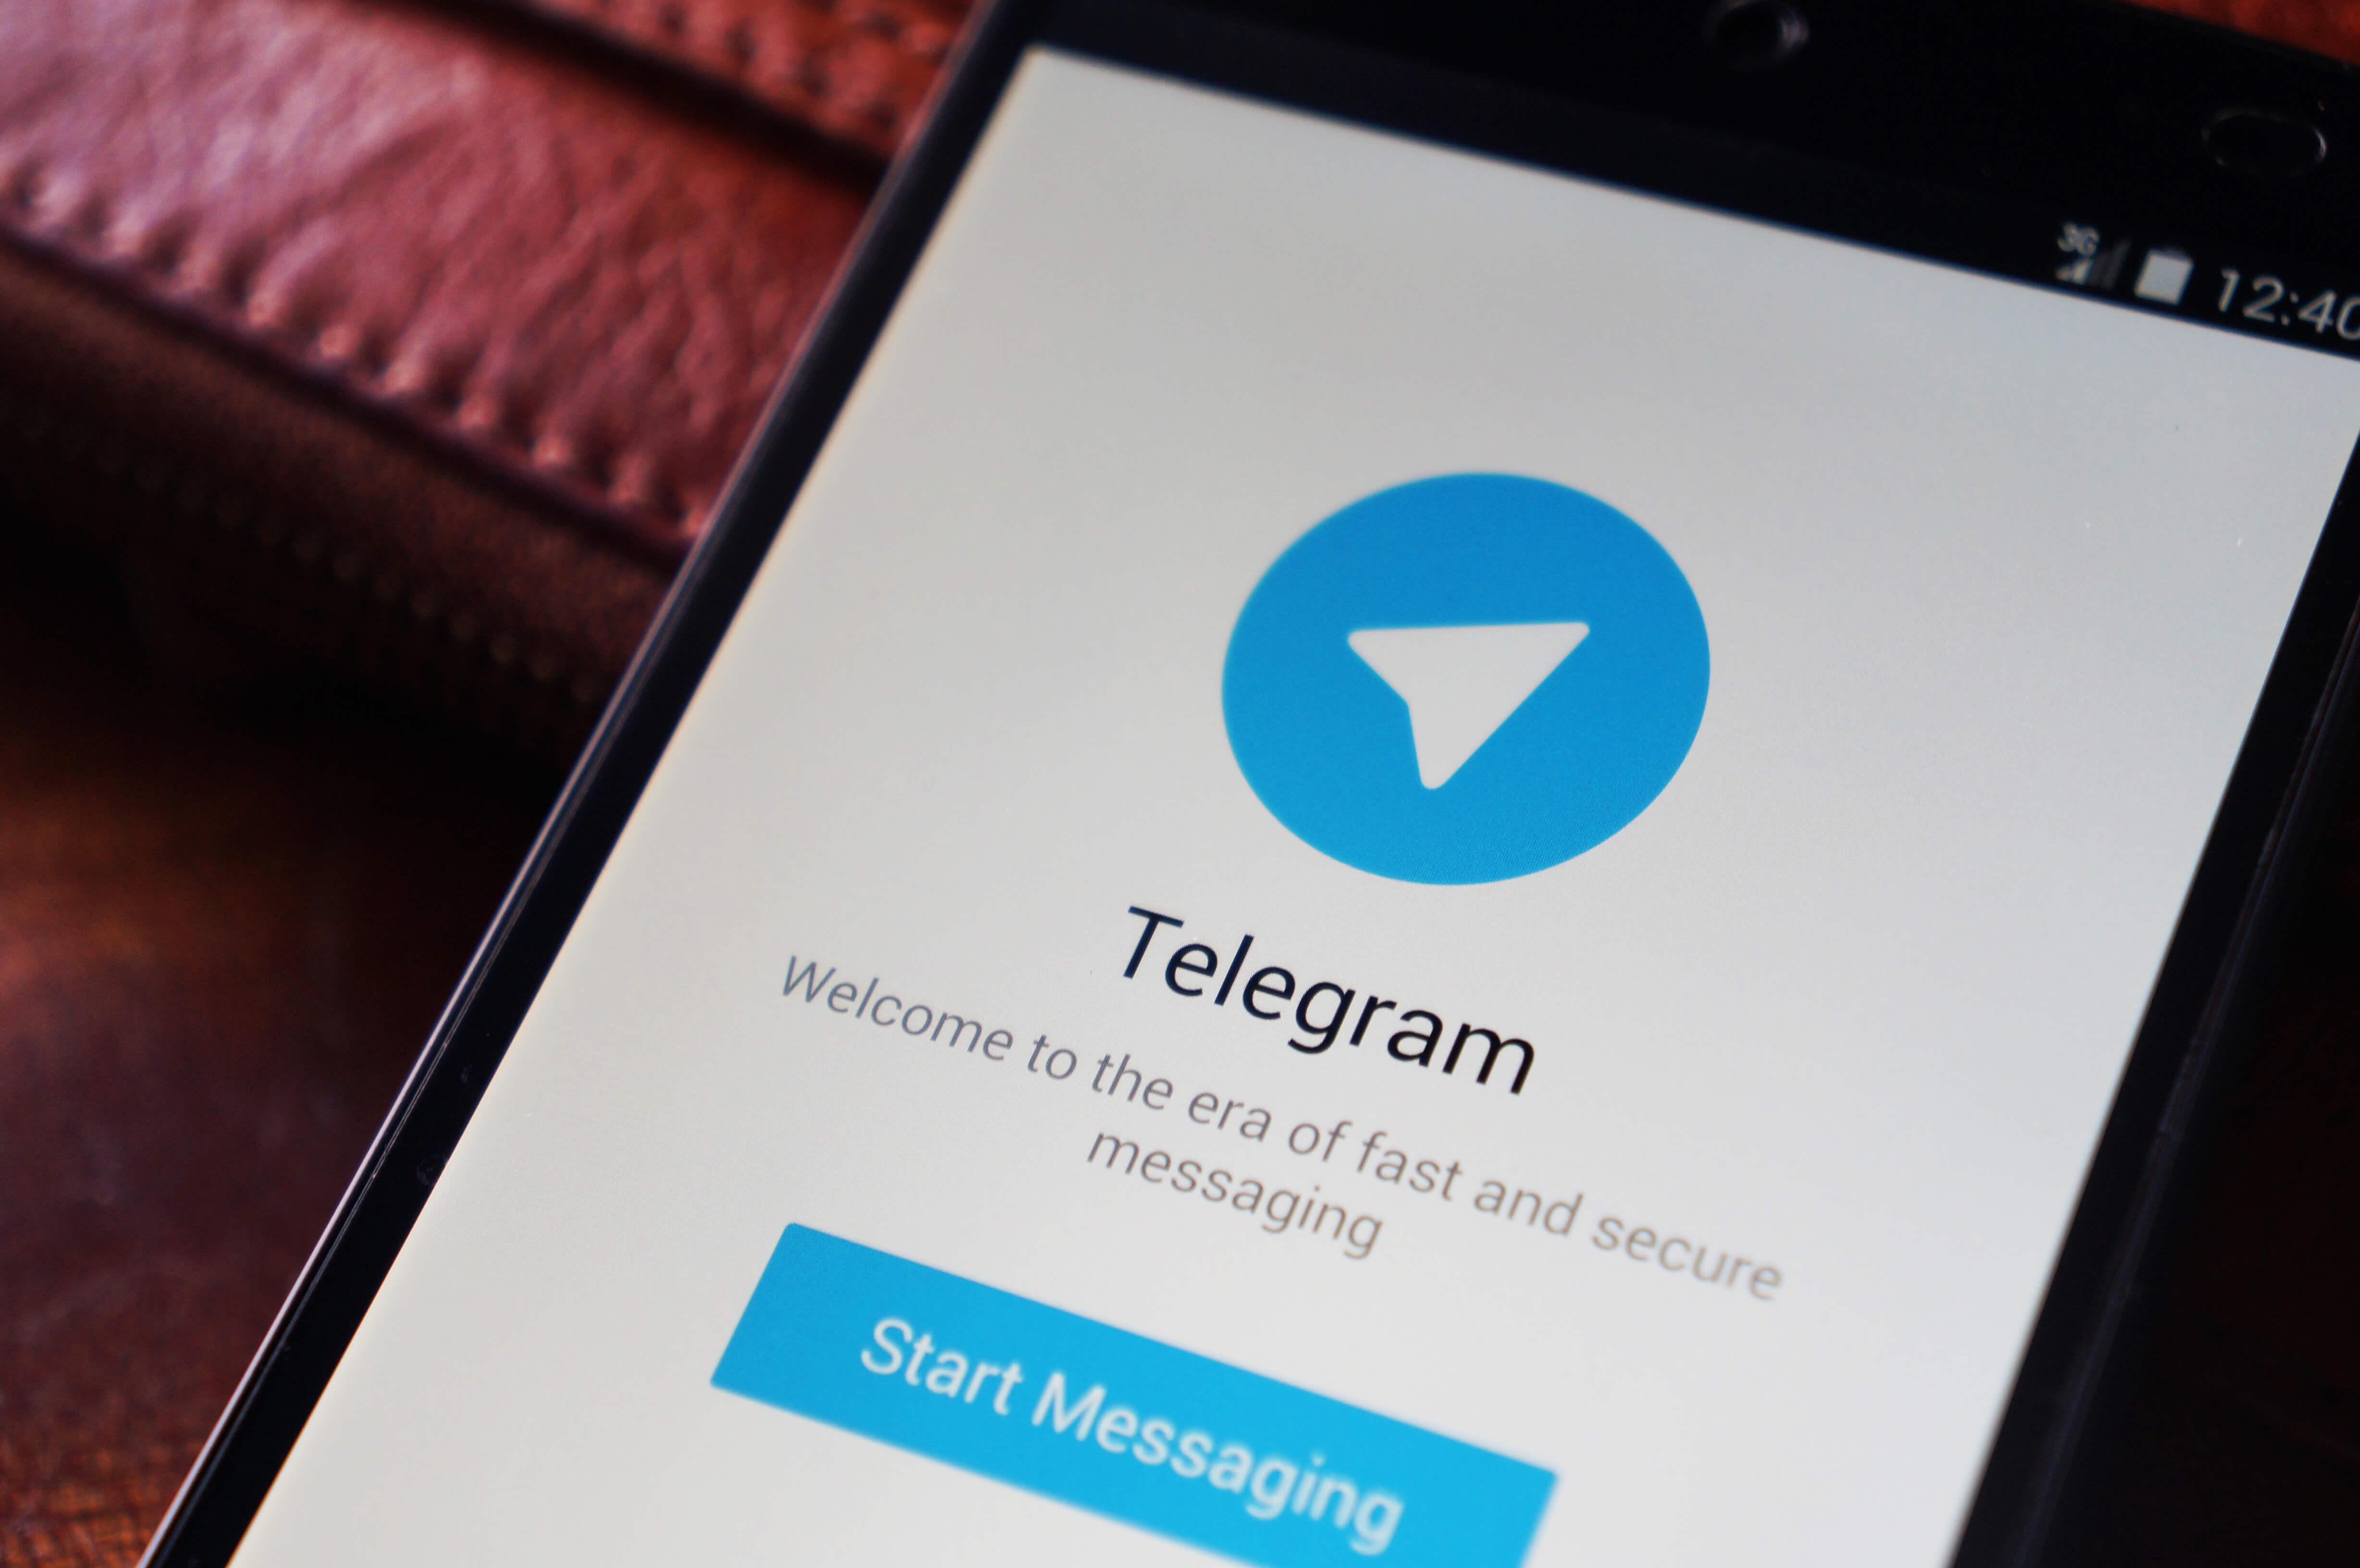 Telegram pictures. Блокировка телеграм. Telegram foto. Мессенджер телеграм. Фото для телеграмма.